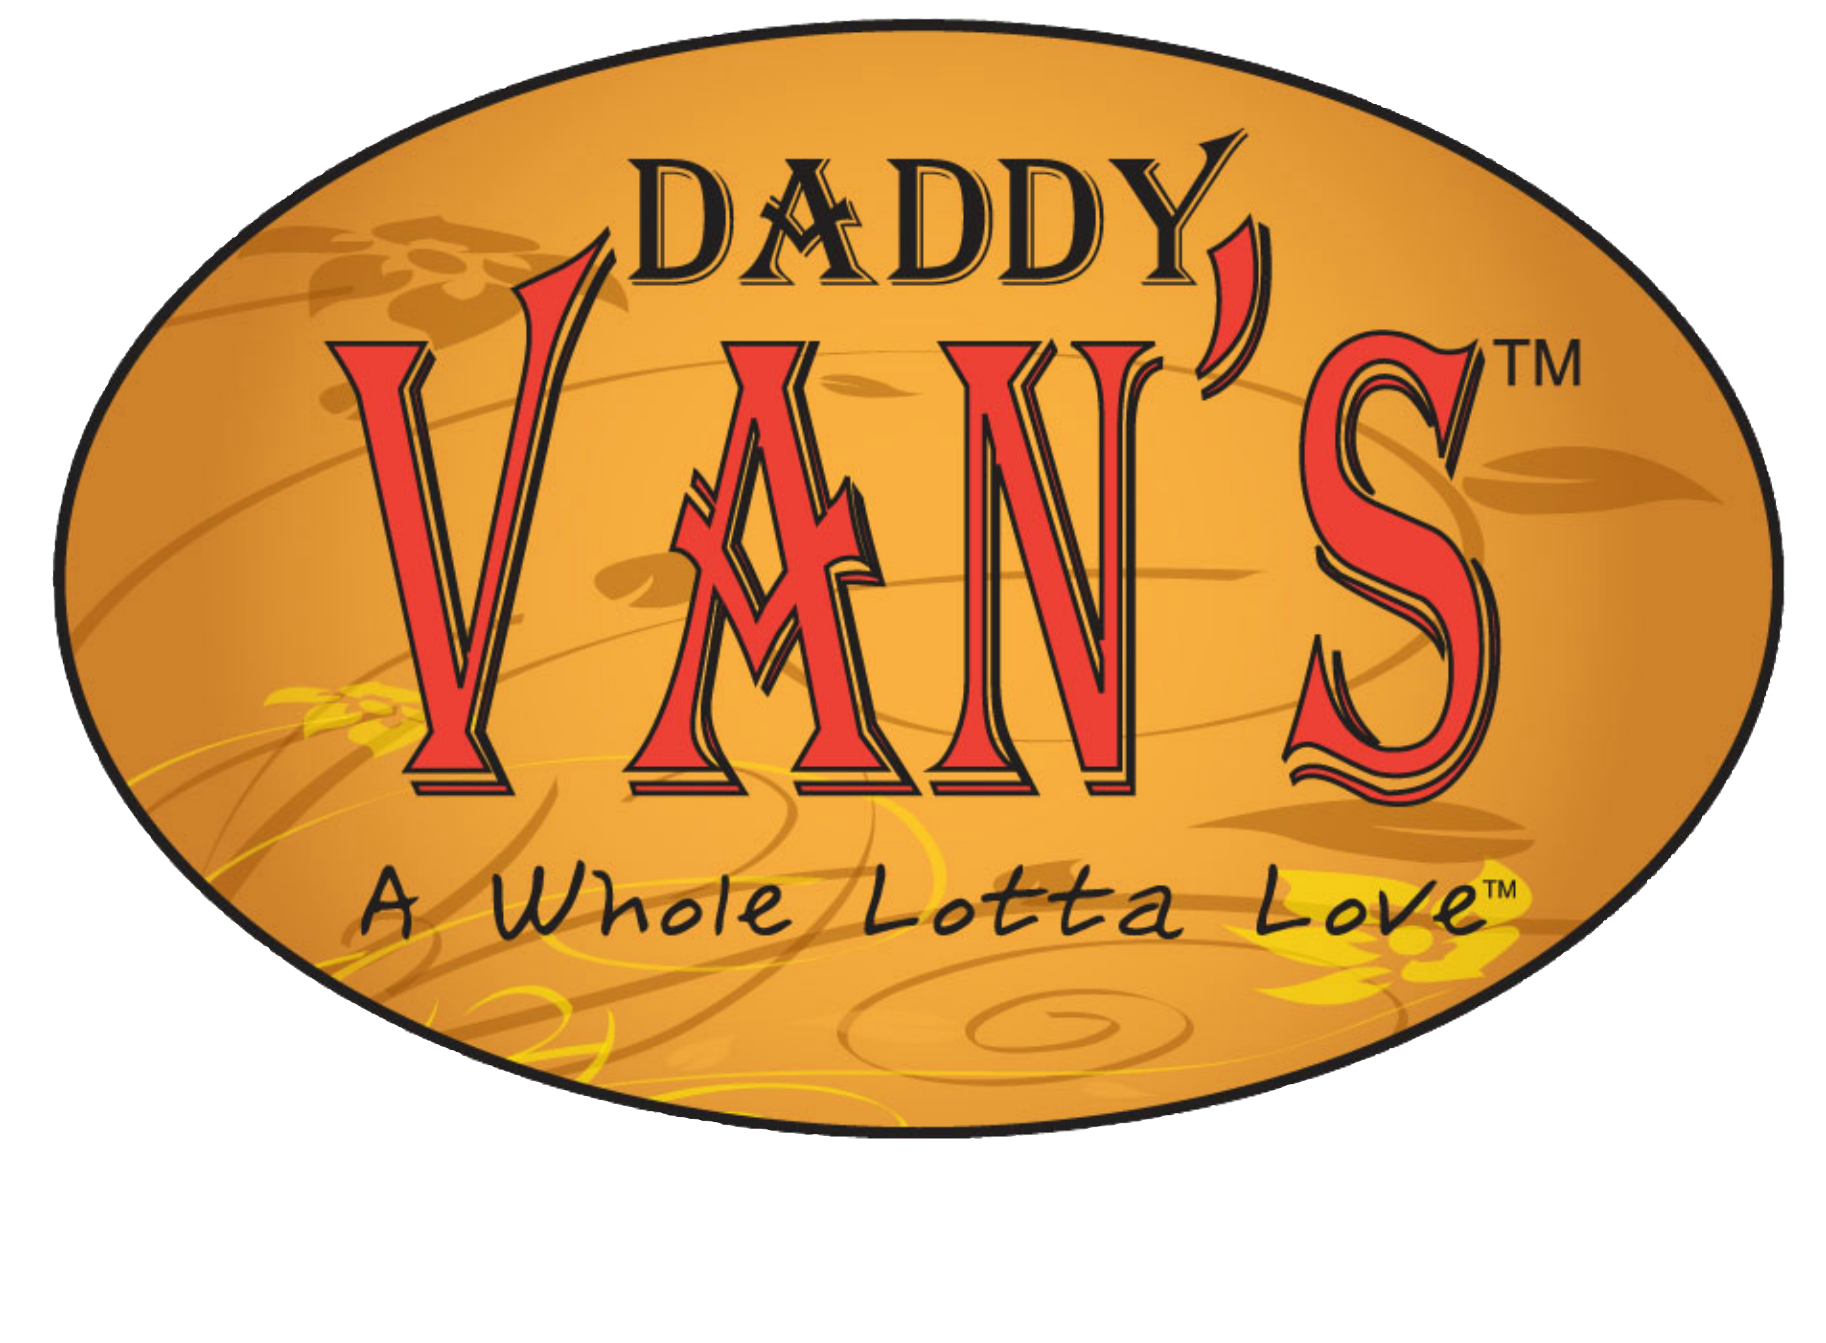 Oz dad логотип. Левел Ван логотип. Daddy logo. Vans logo. Download daddy